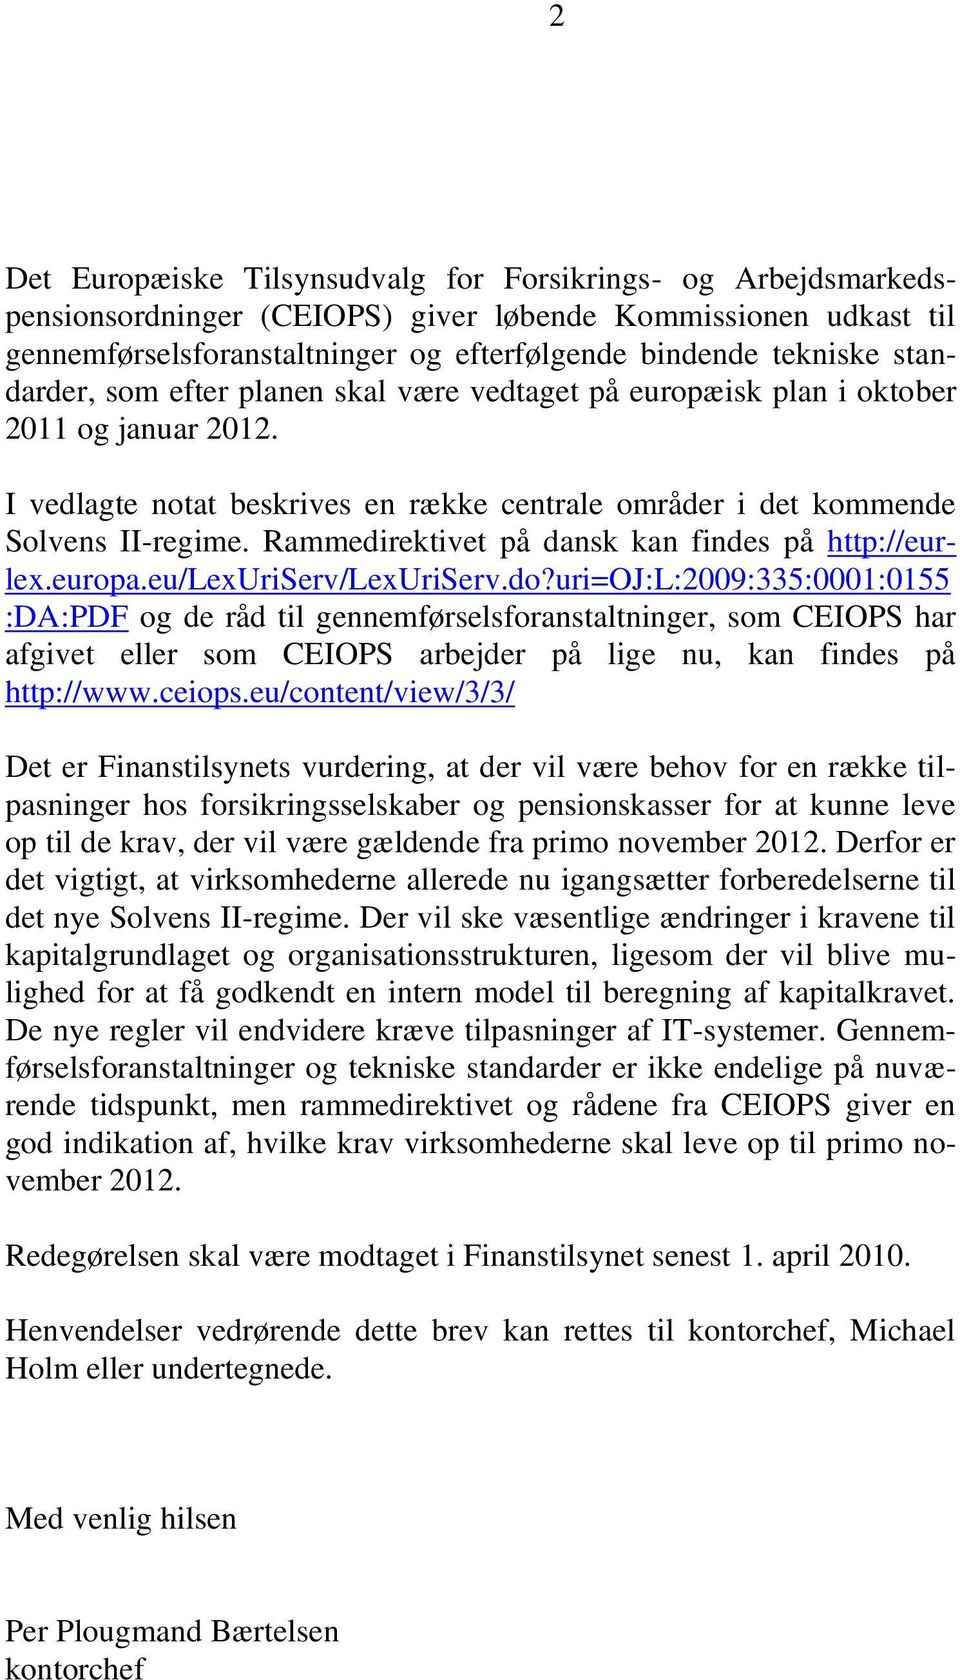 Rammedirektivet på dansk kan findes på http://eurlex.europa.eu/lexuriserv/lexuriserv.do?